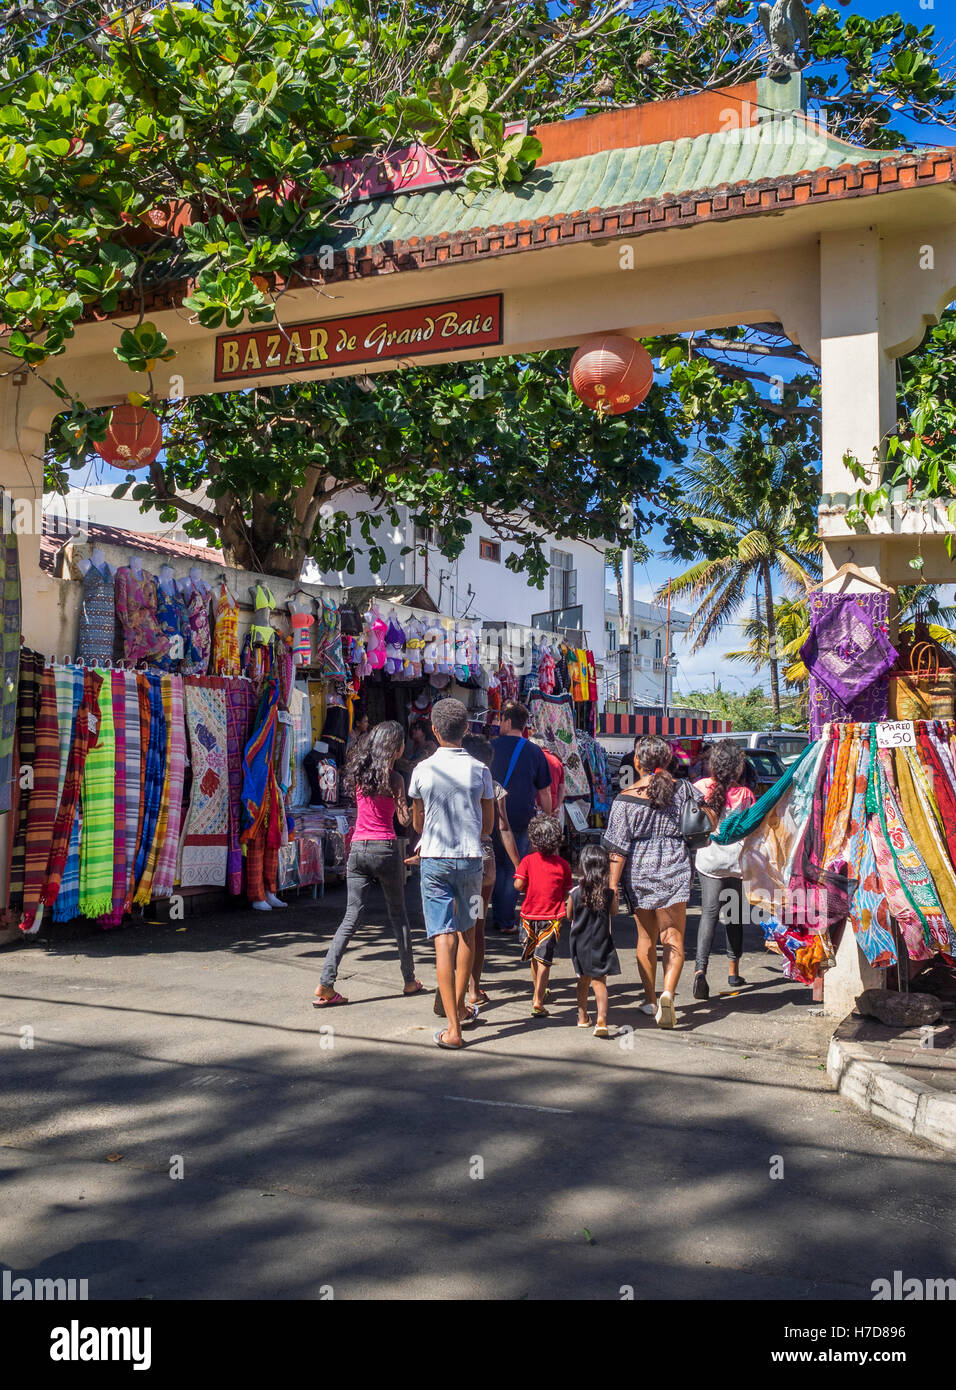 Entering the tourist market of Grand Baie, Bazar de Grand Baie, Mauritius Stock Photo